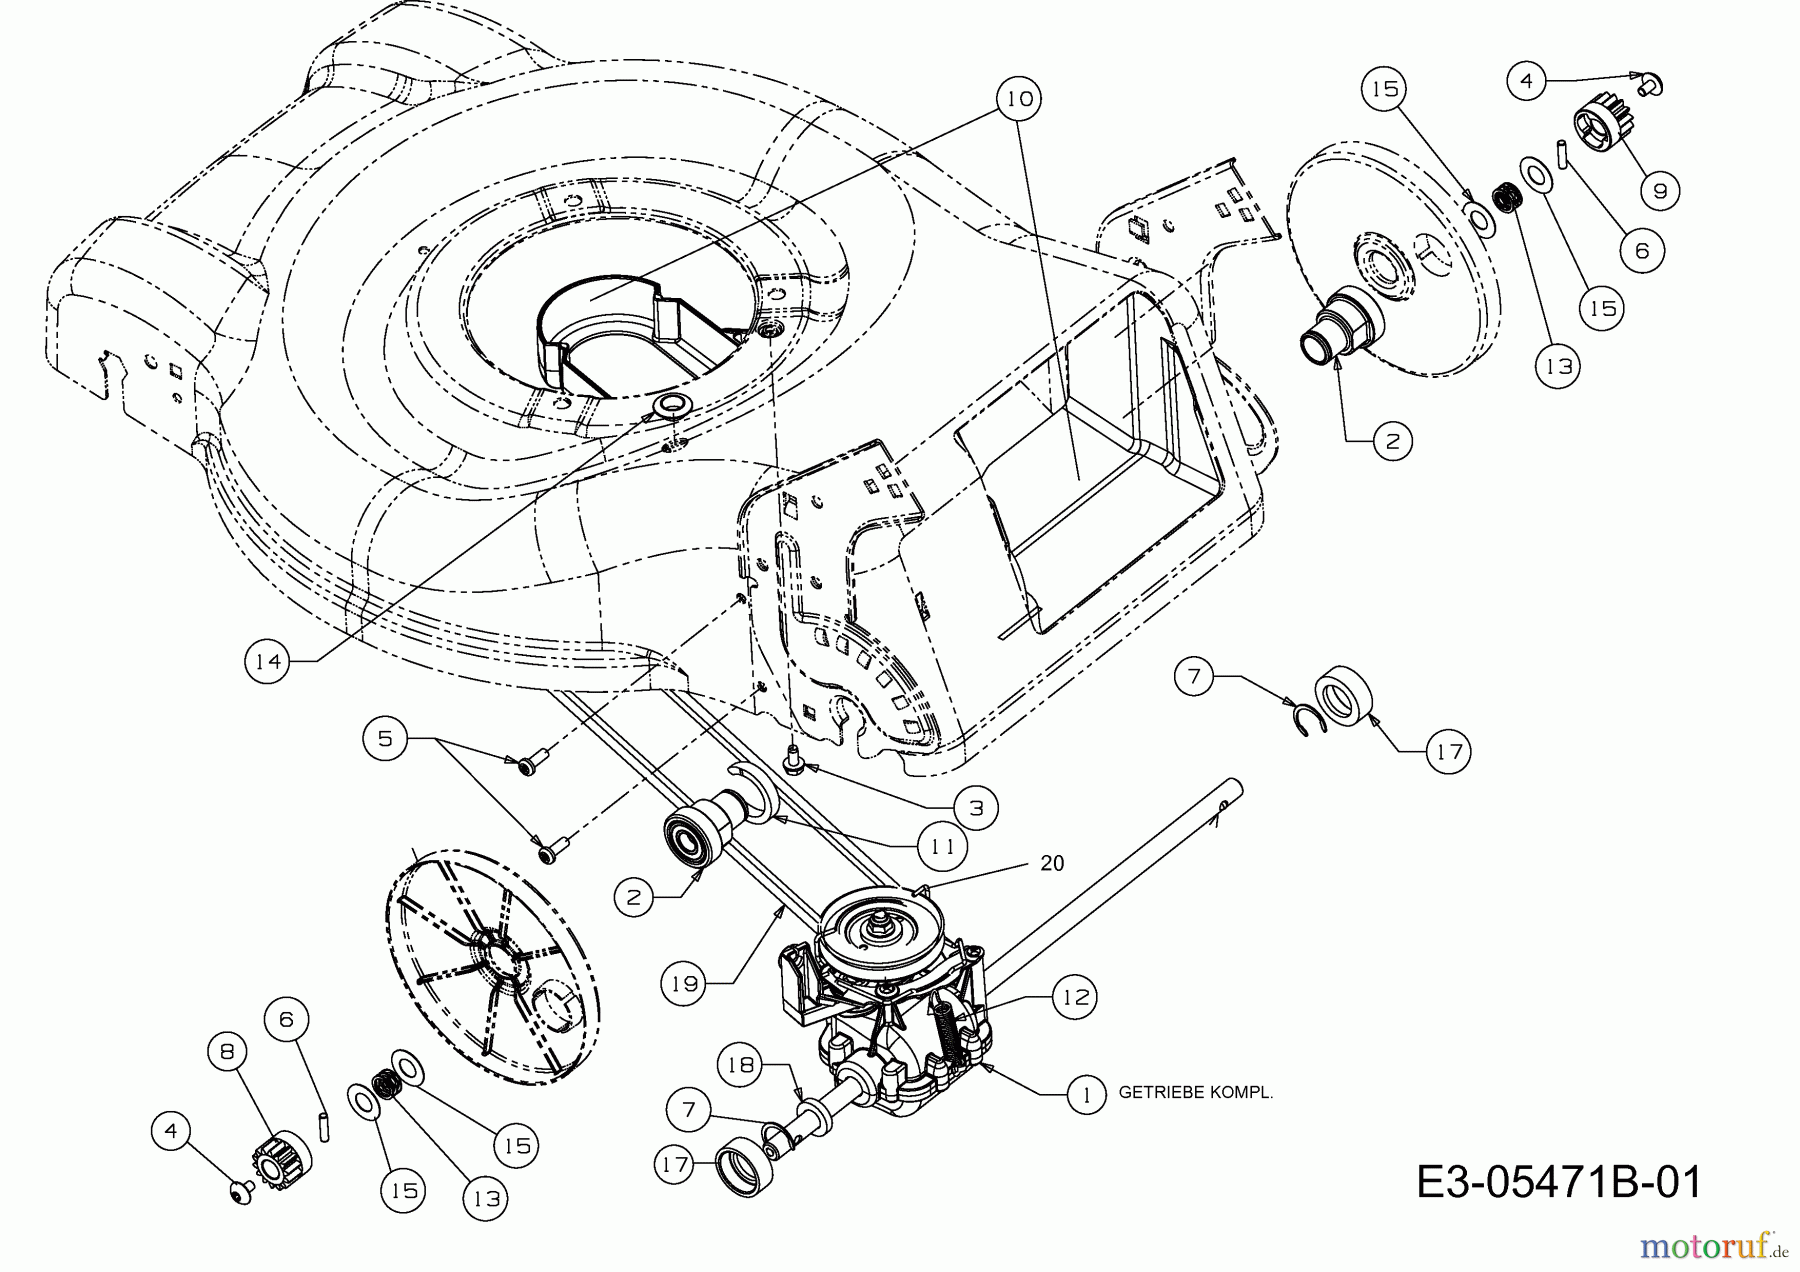  MTD Motormäher mit Antrieb DL 46 SP 12A-J7M8677  (2015) Getriebe